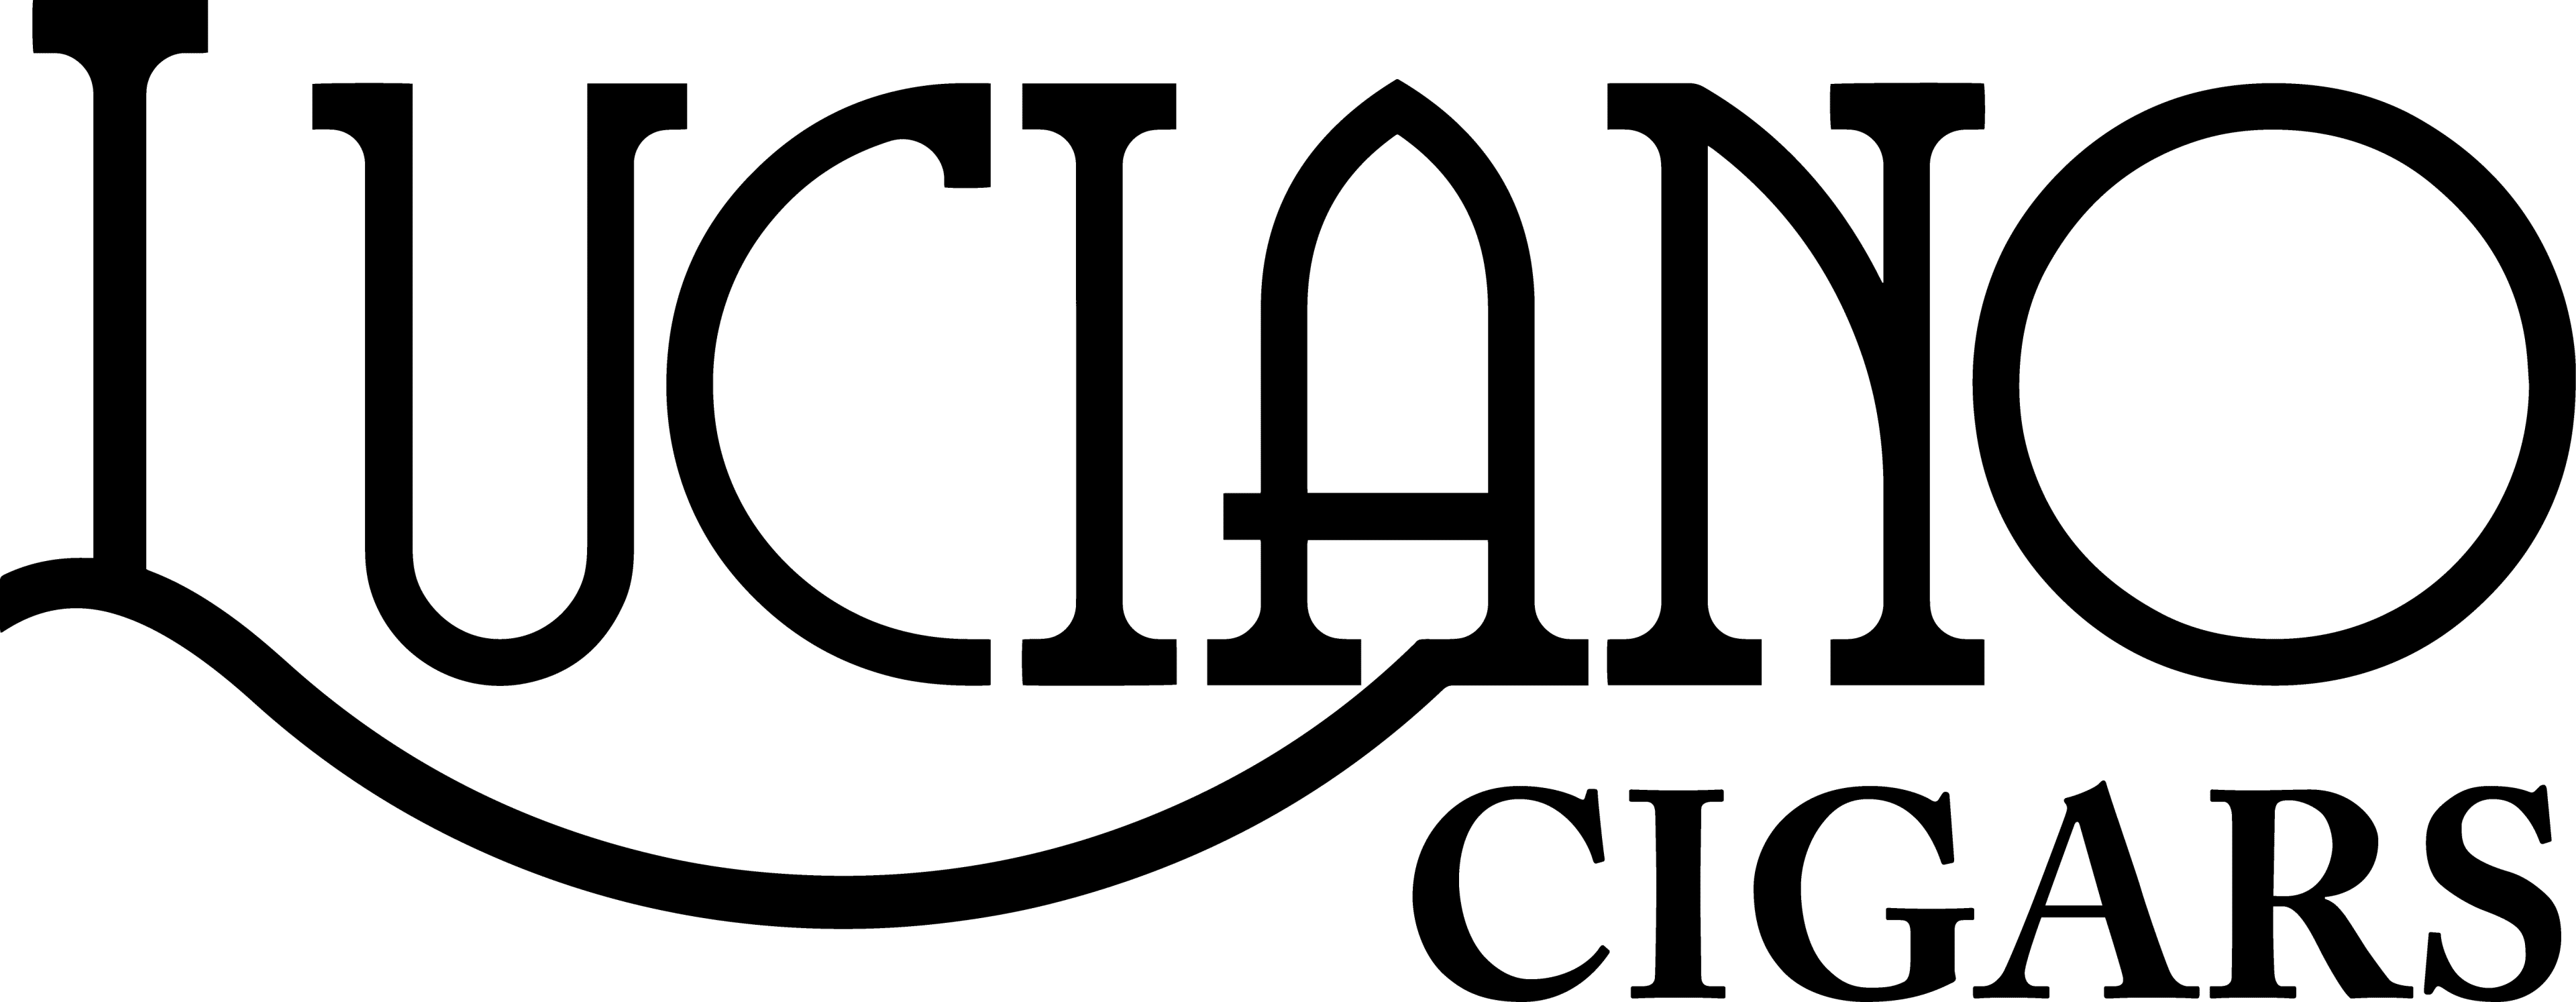 Luciano Cigars Begins Self-Distribution, Adds ATL Cigar Company to Portfolio- Cigar News